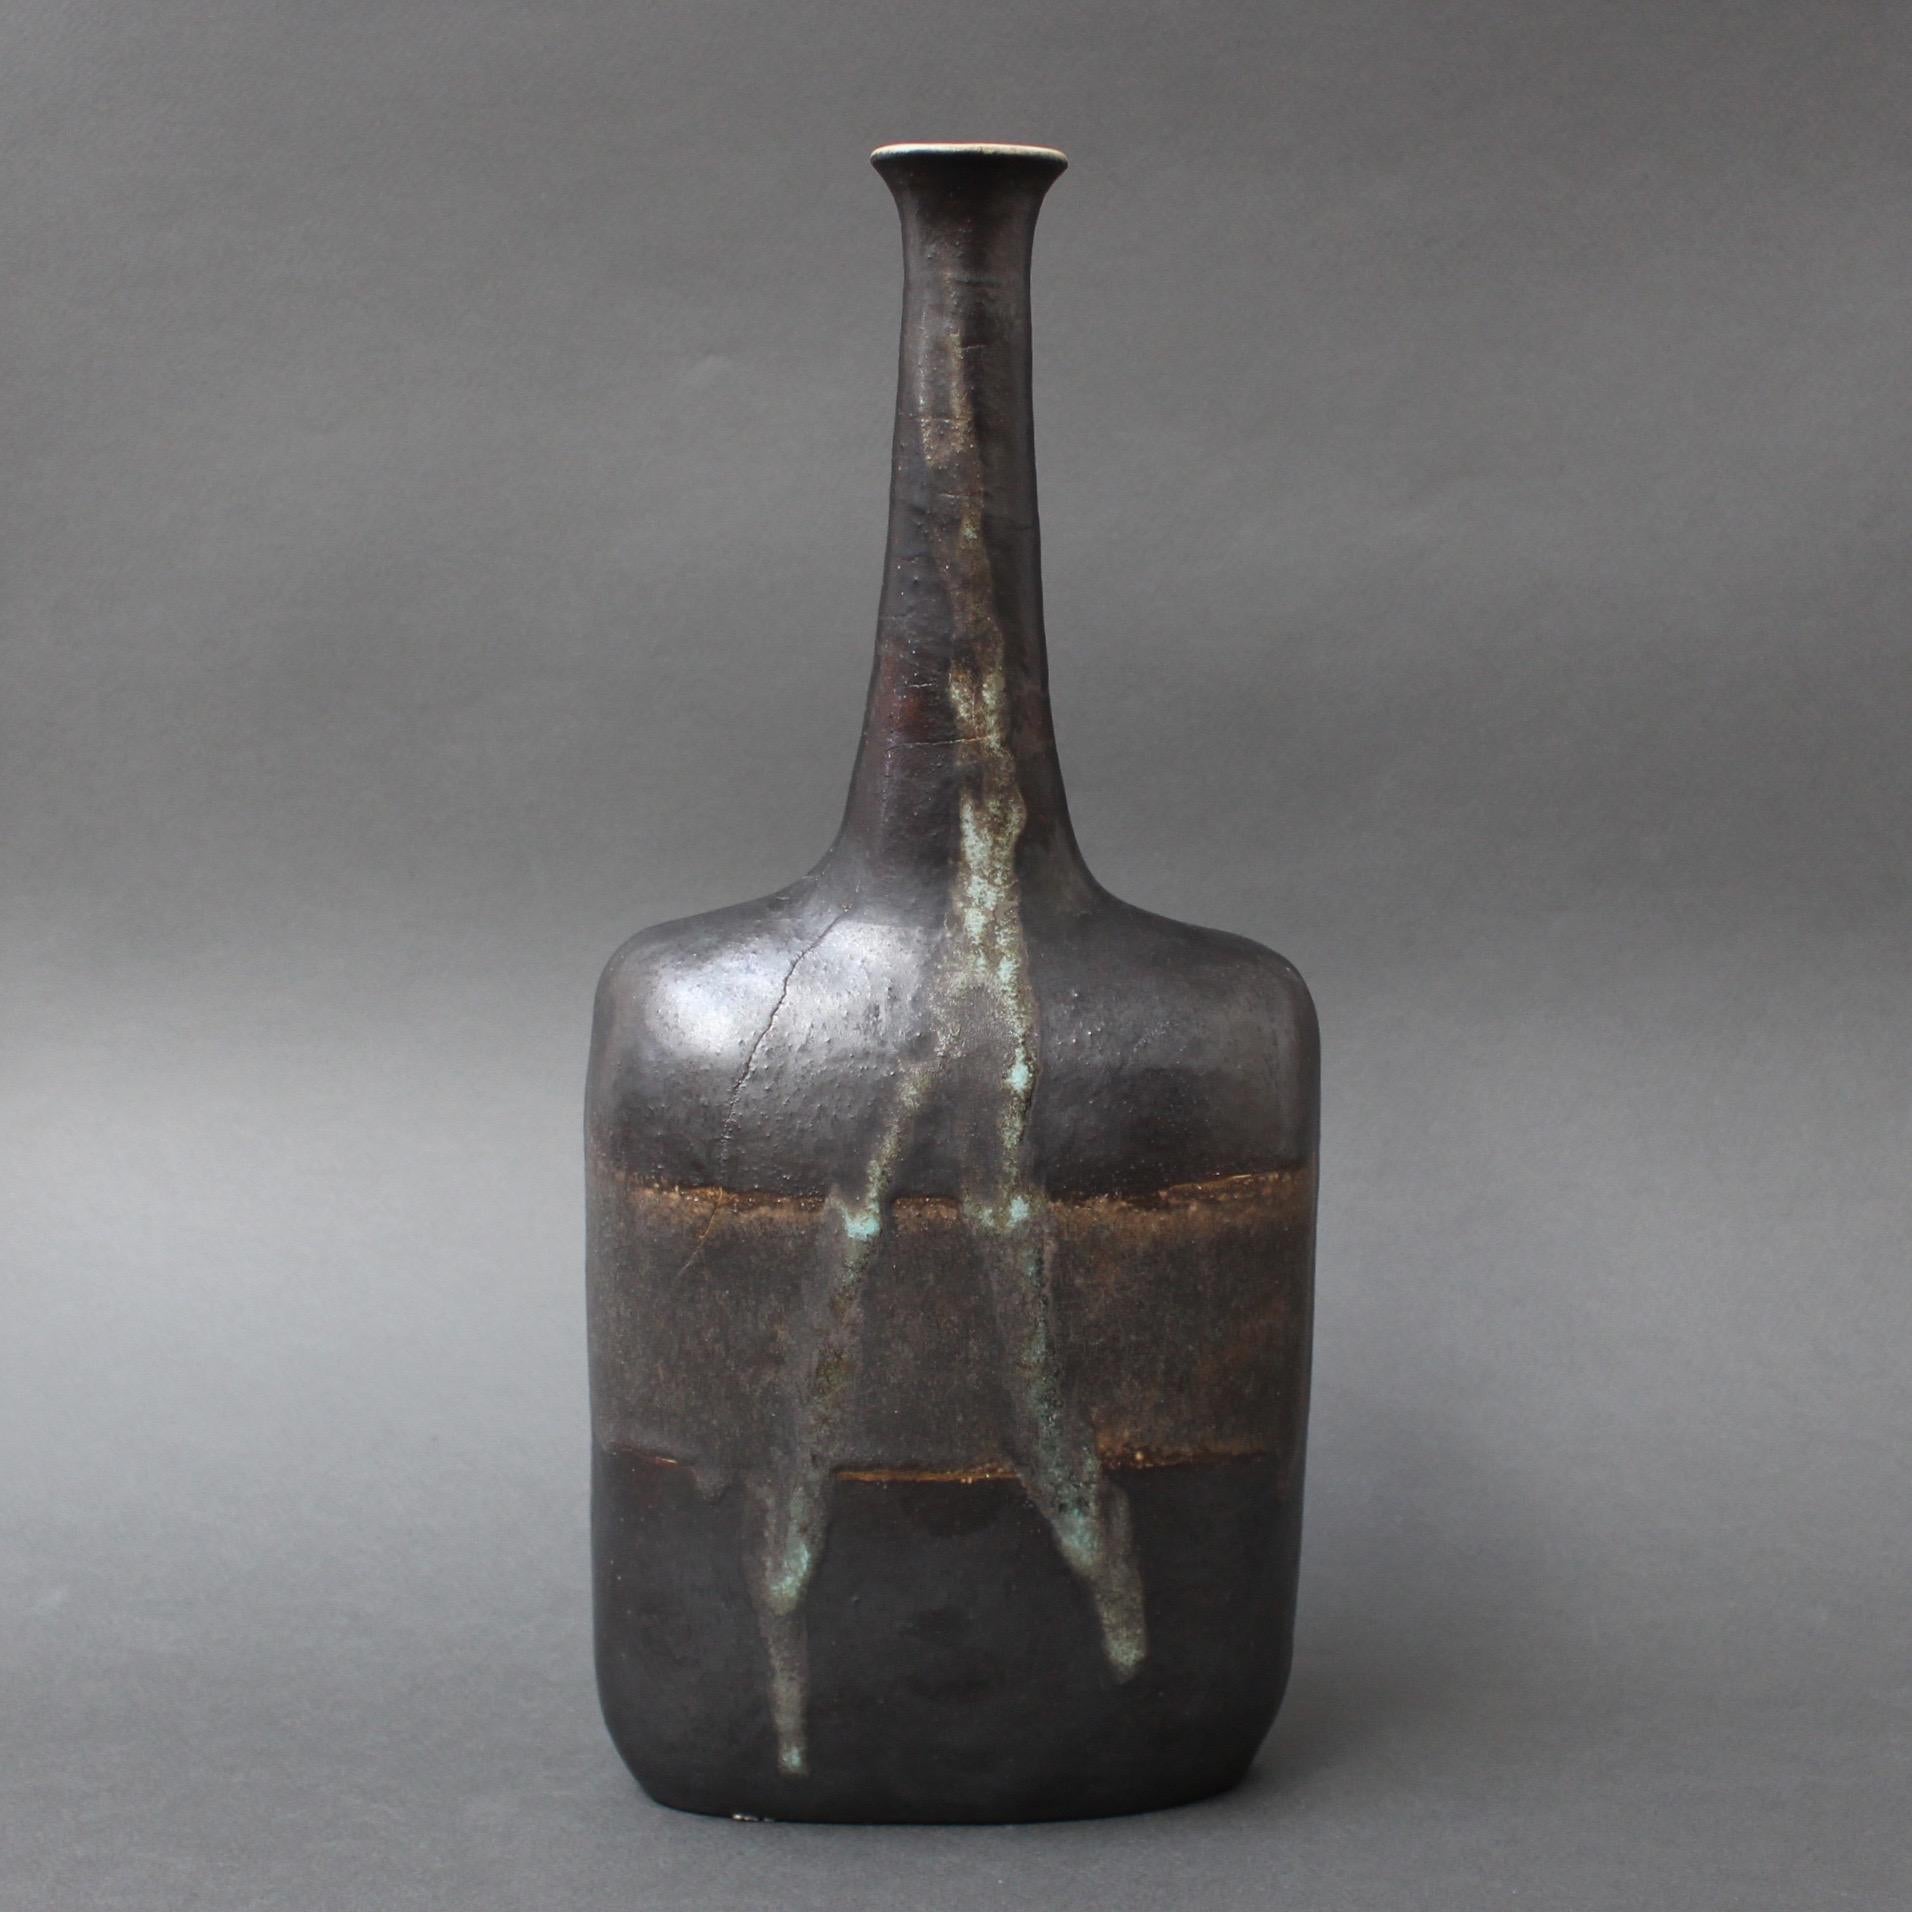 Ceramic Bottle-Shaped Black Decorative Vase by Bruno Gambone, circa 1980s (Ende des 20. Jahrhunderts)